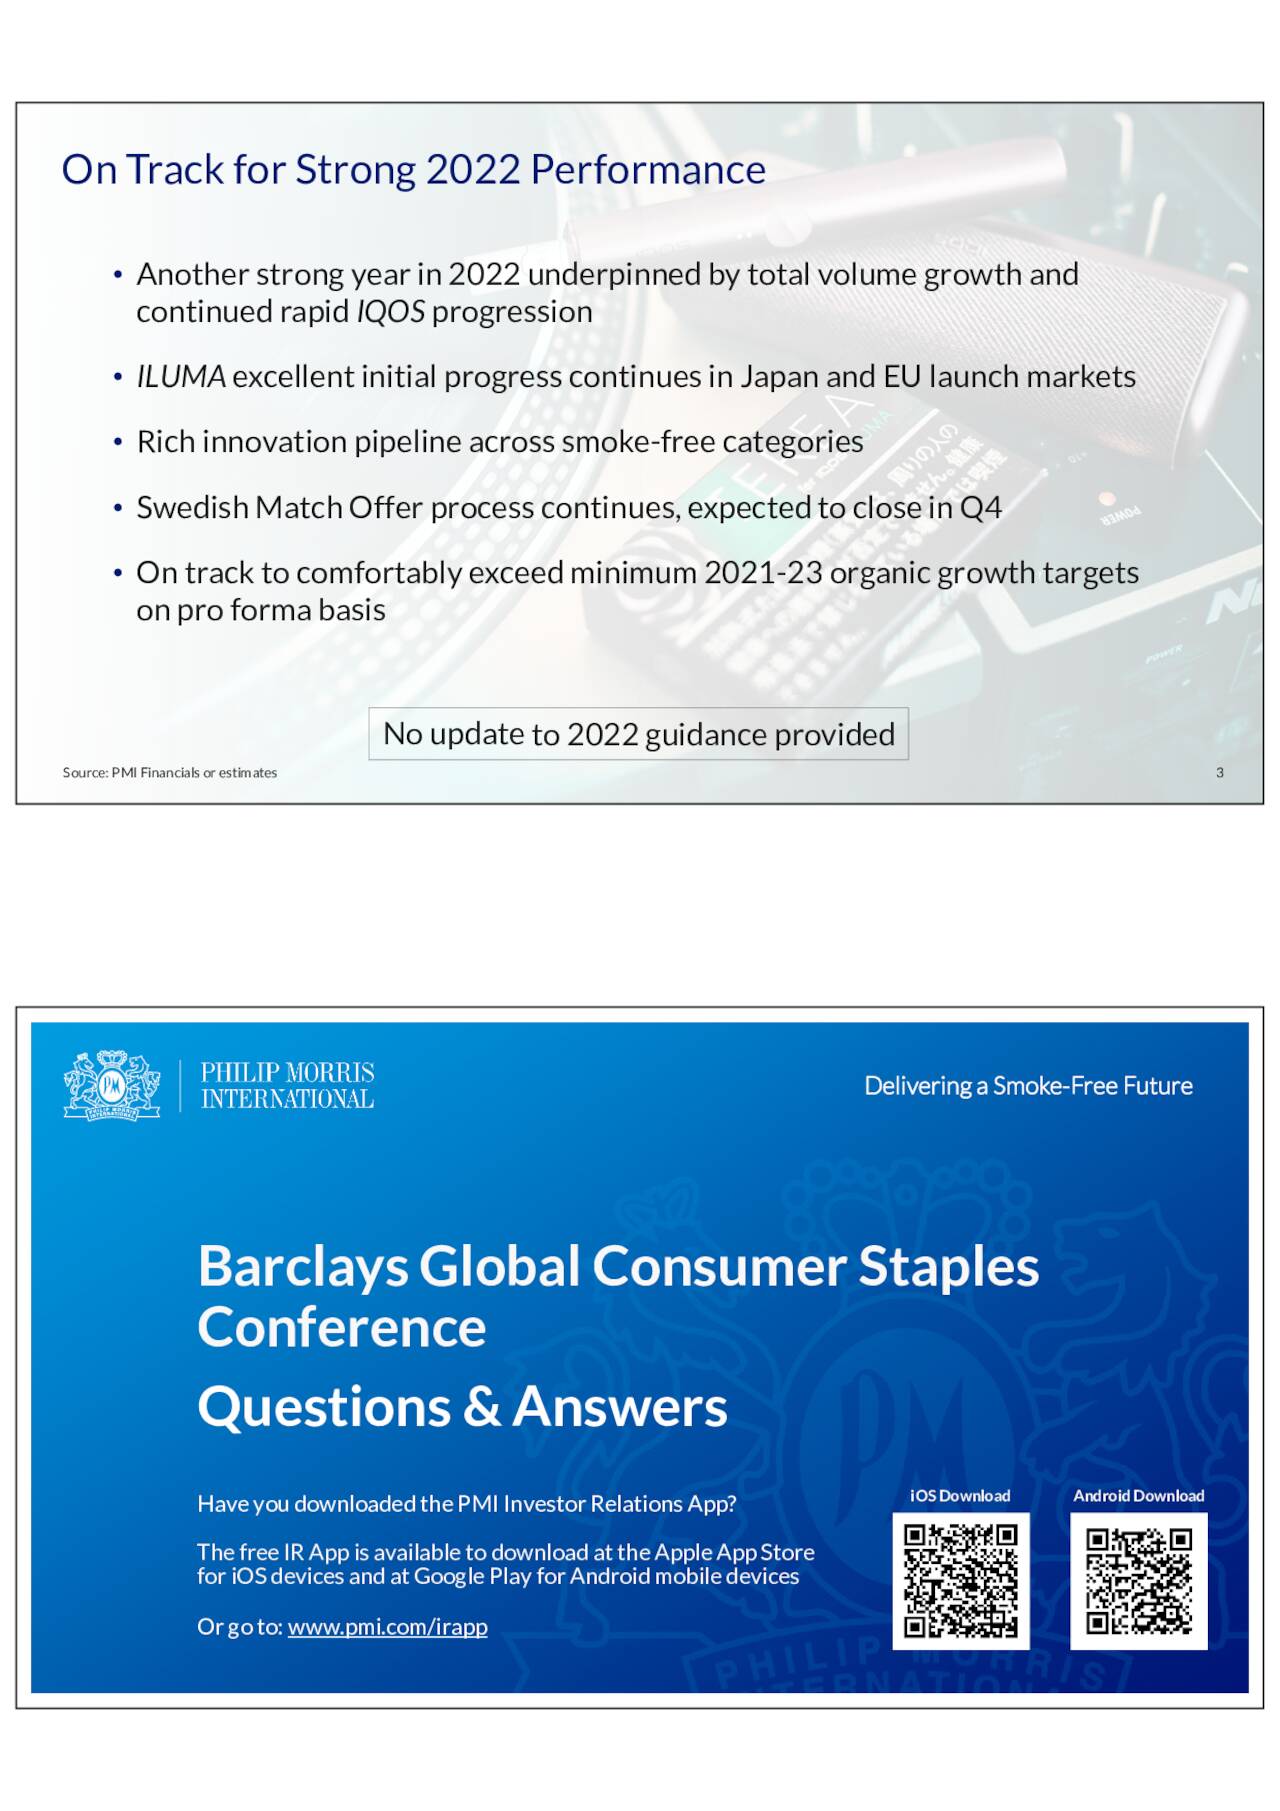 Philip Morris International (PM) presents at Barclays Global Consumer